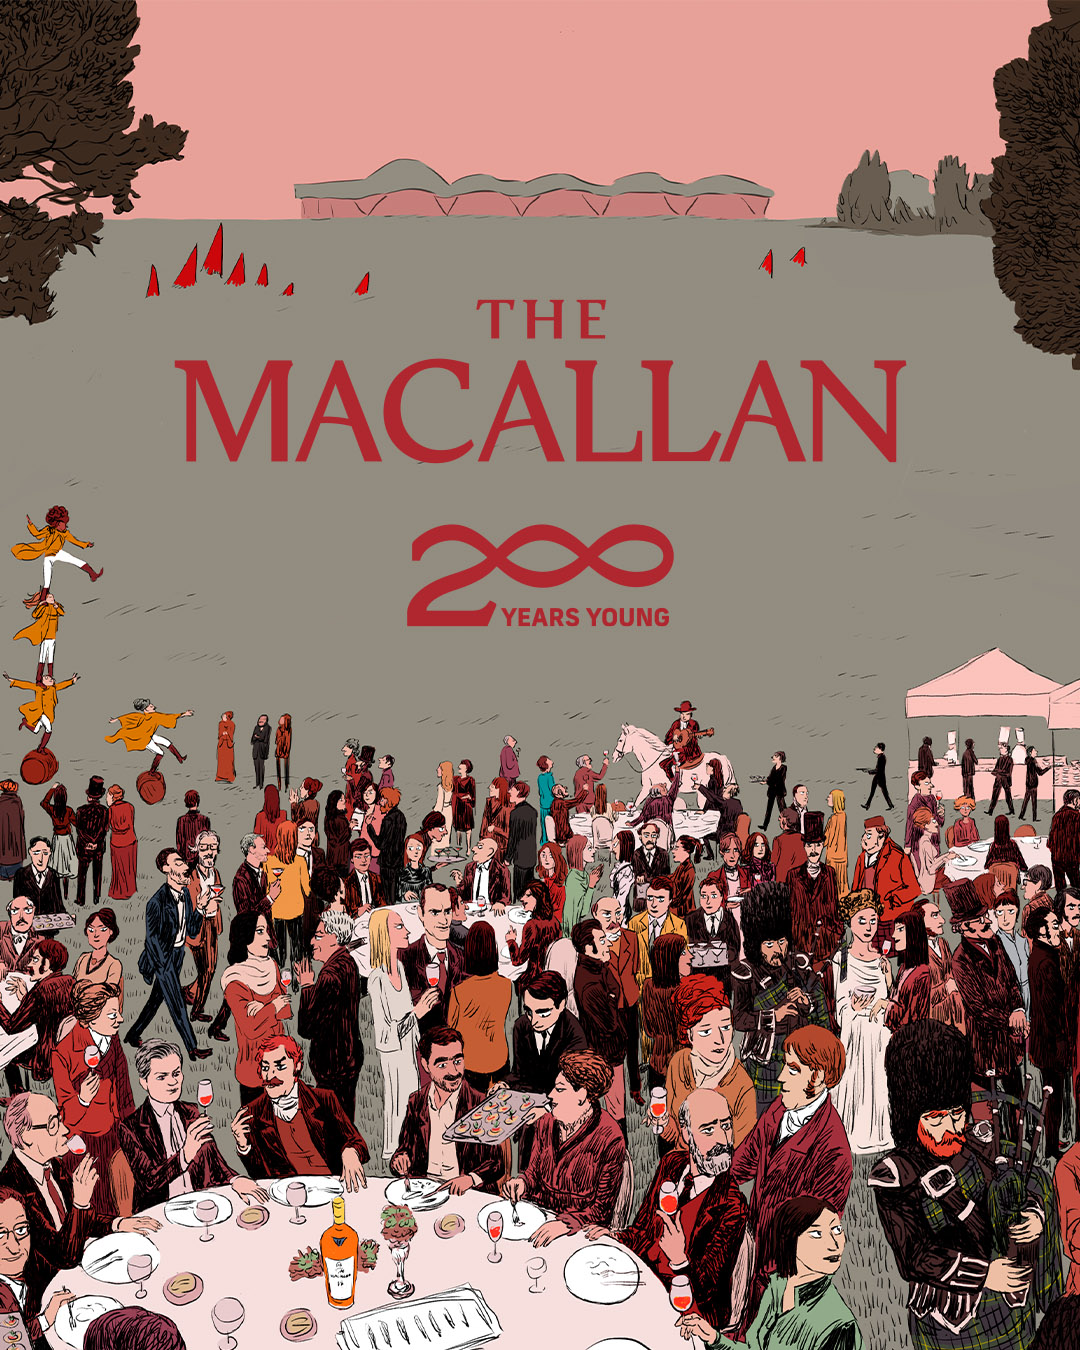 Illustration για τα 200 χρόνια του ουίσκι, The Macallan